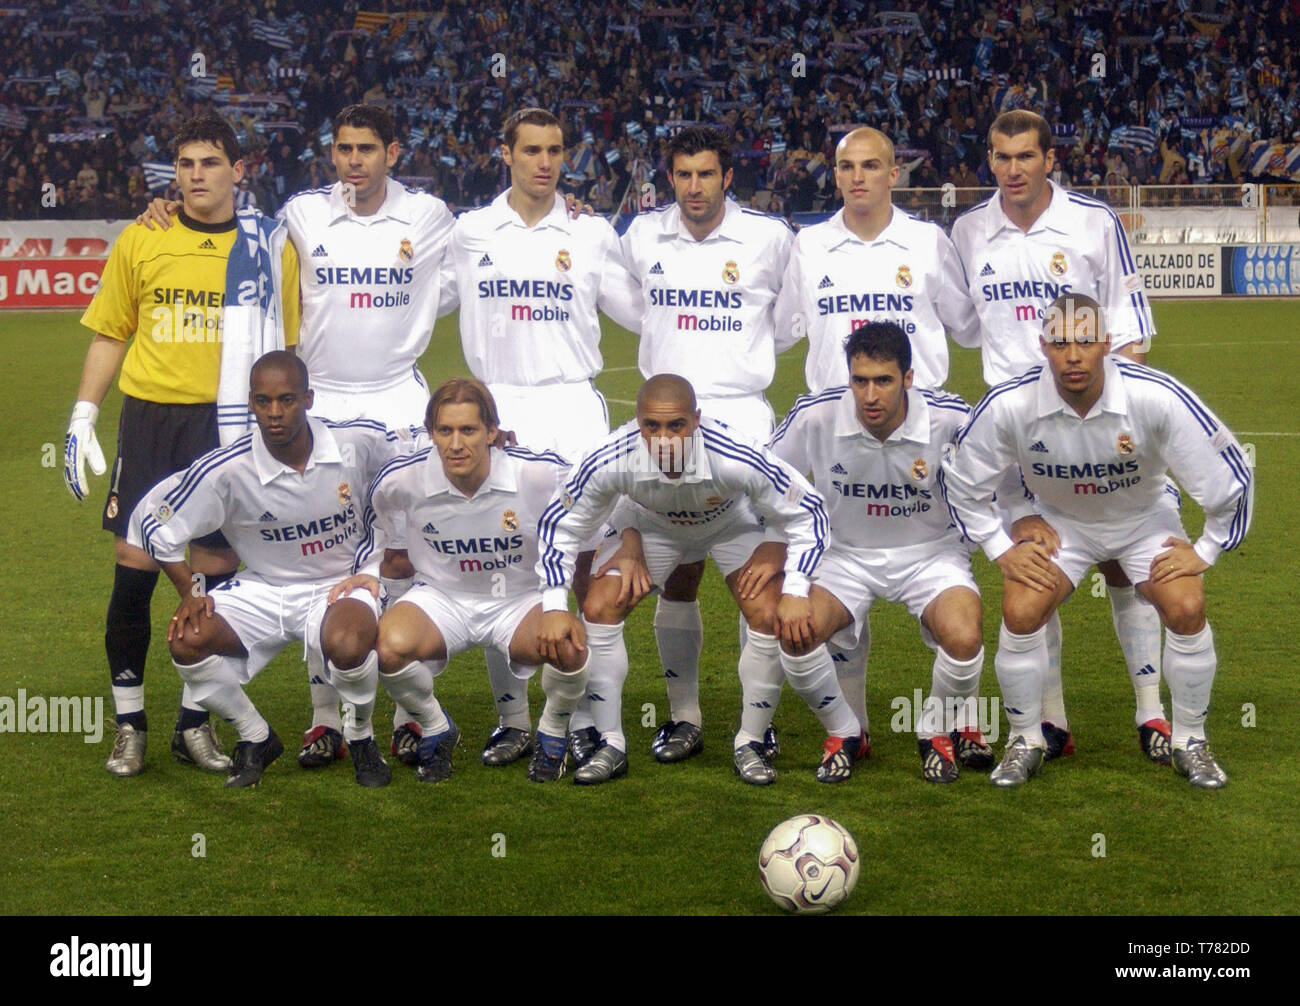 Real Madrid Team Photo Stock Photos & Real Madrid Team Photo Stock ...